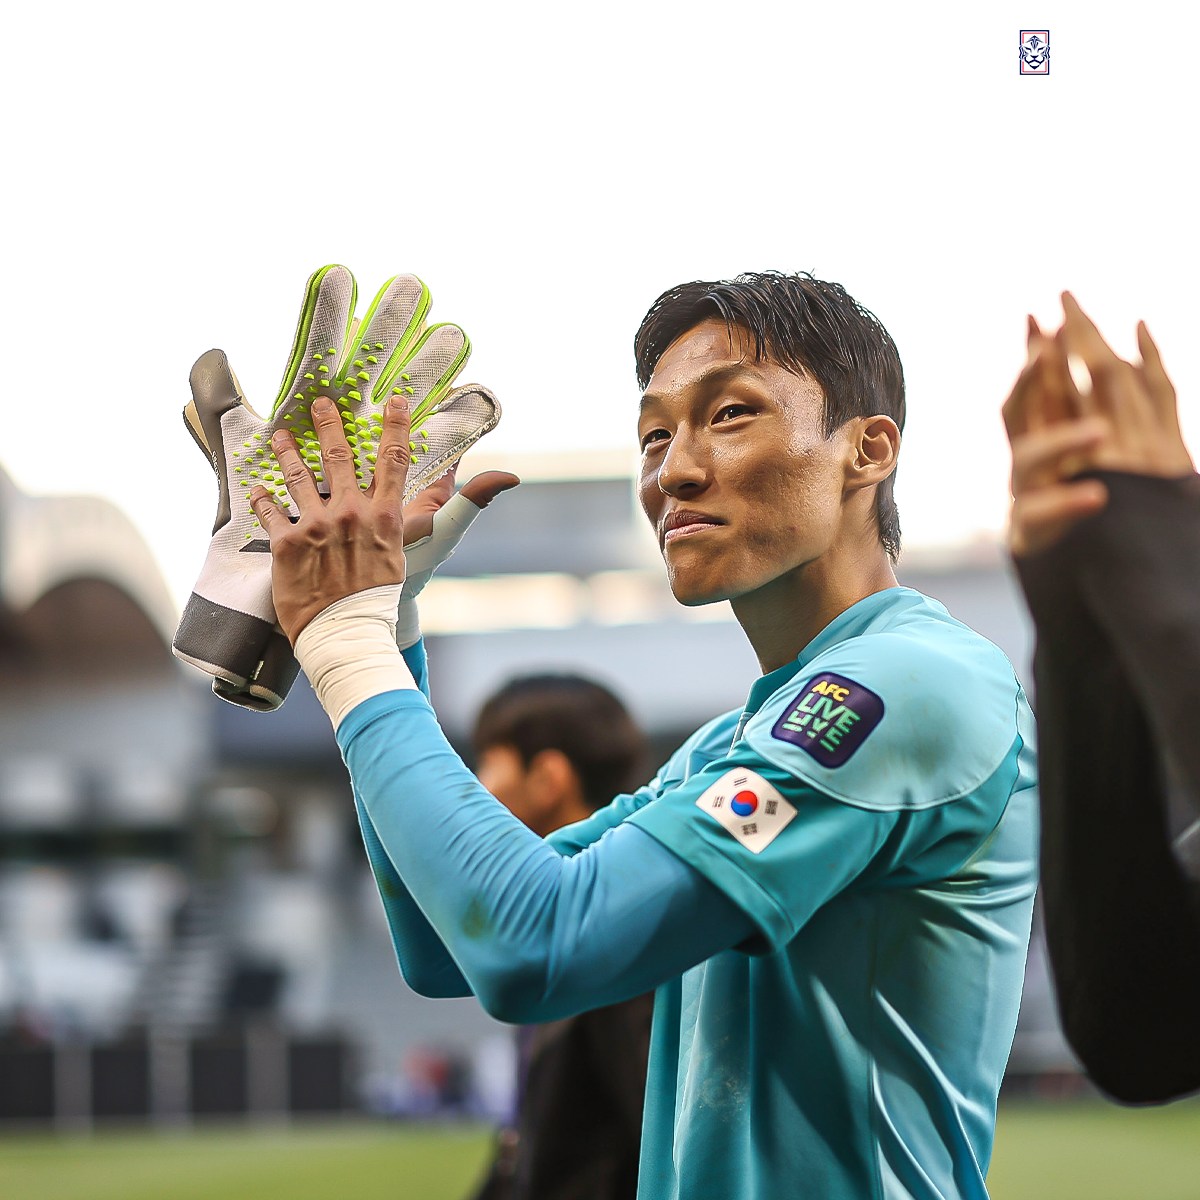 Penjaga gol Kim cedera ACL, terlepas beraksi dalam Piala Asia